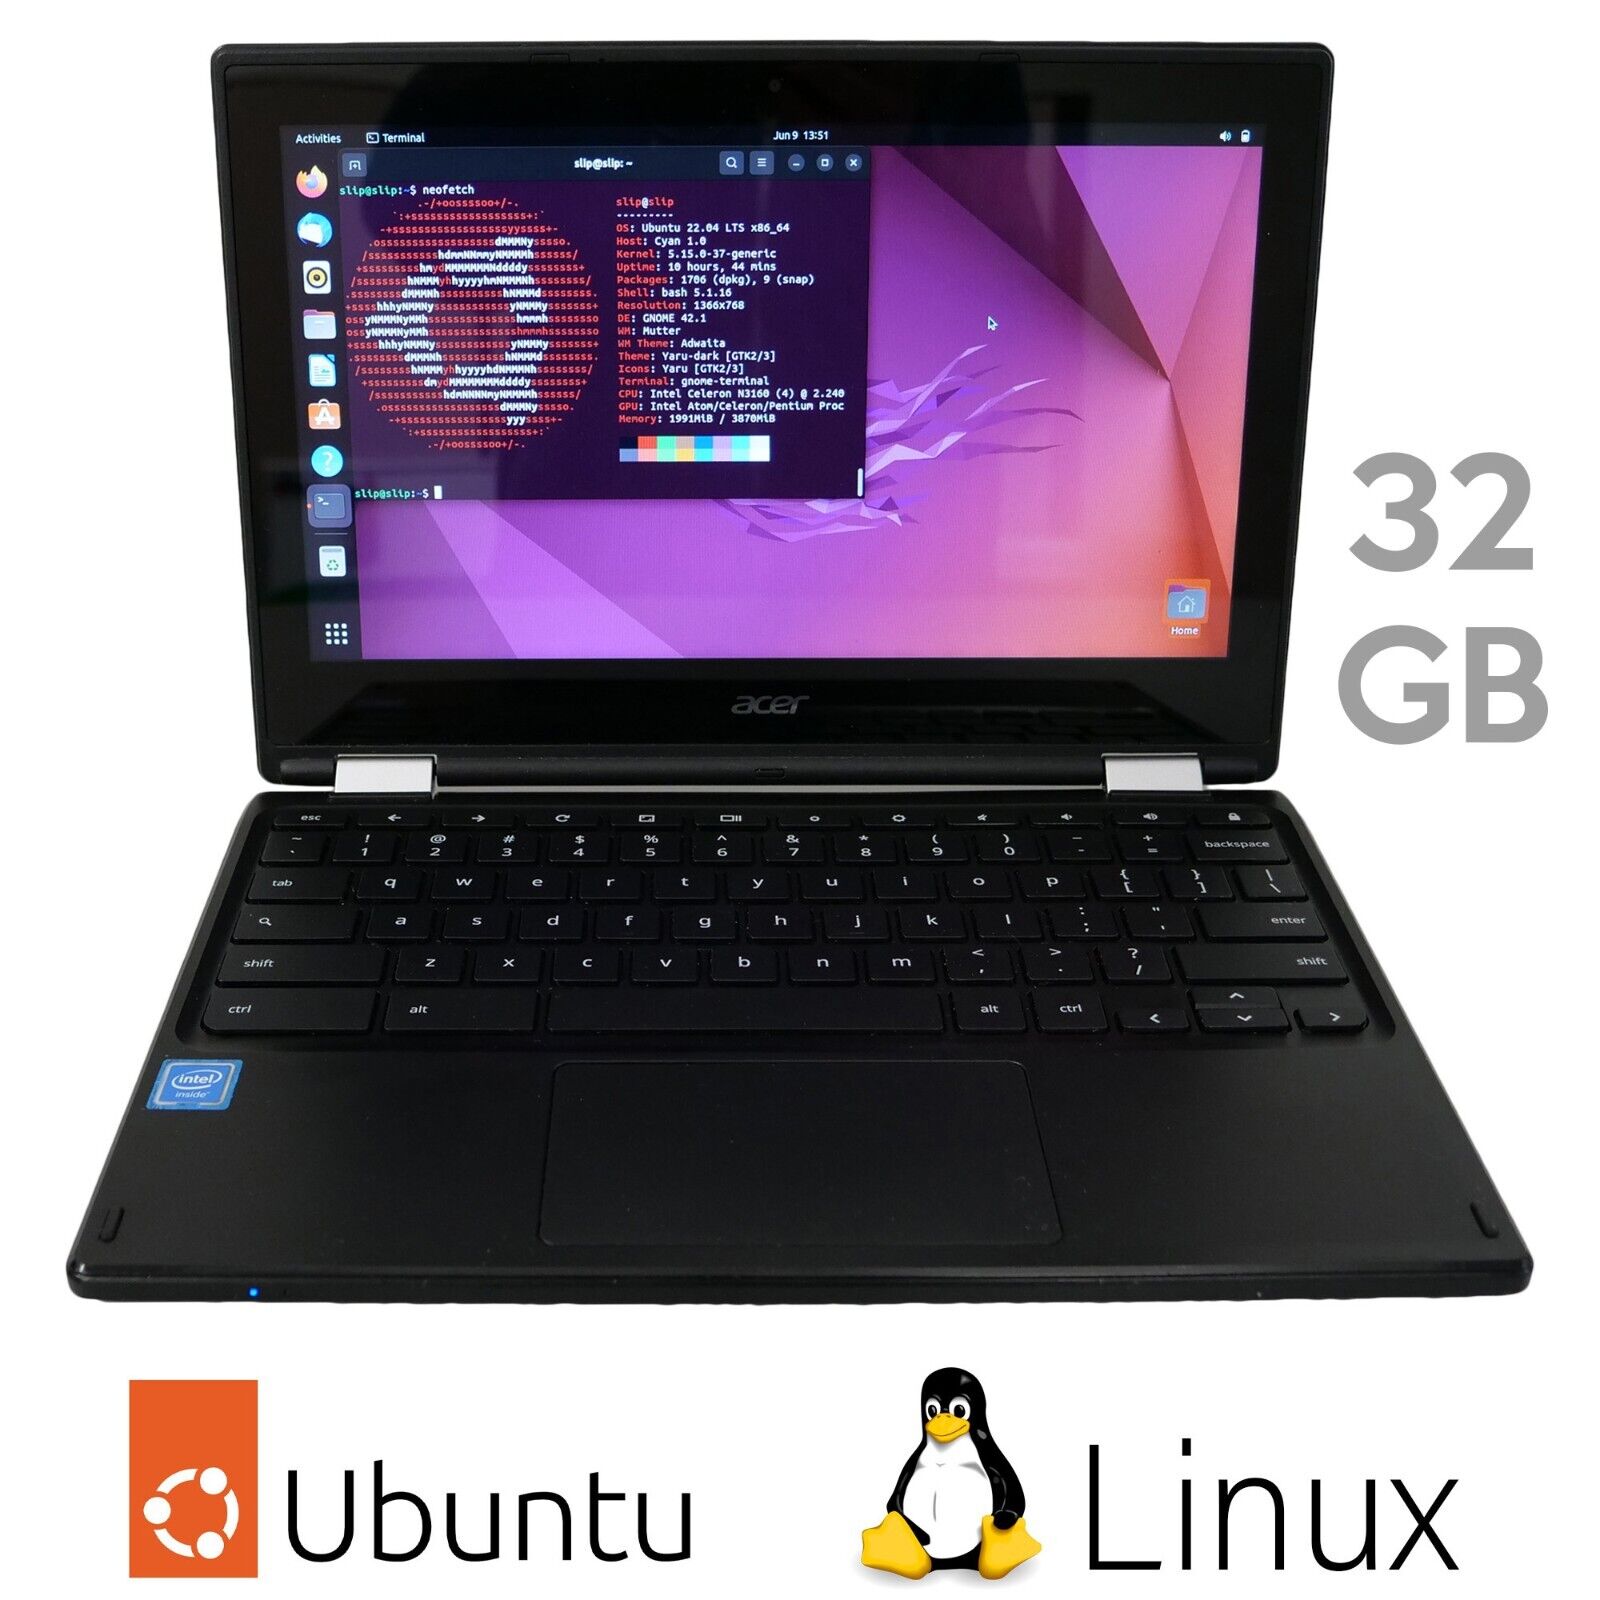 Ubuntu Linux Laptop - 32GB SSD 4GB RAM Acer R11...